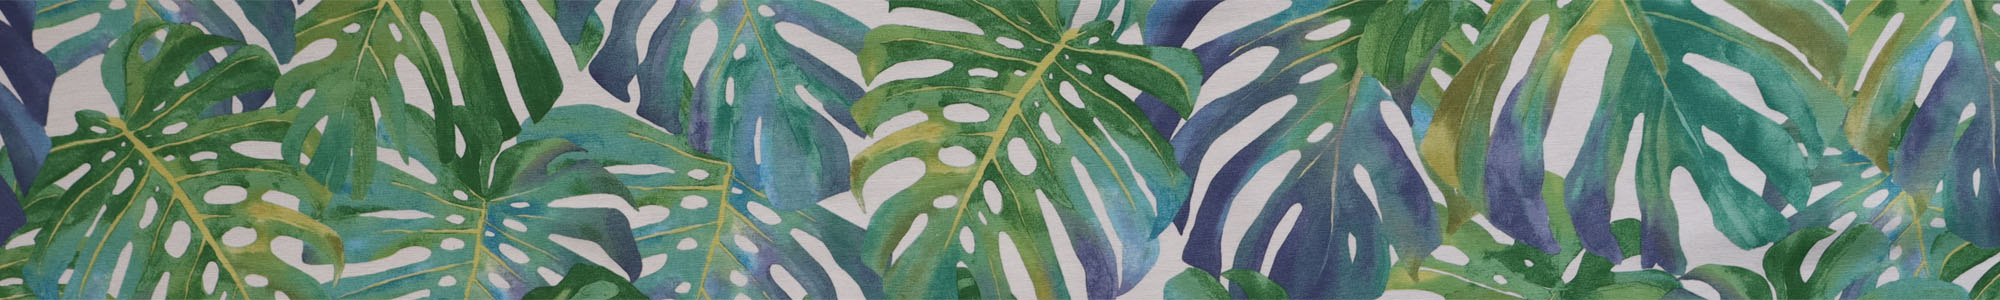 Banner 300 - Green Palm Leaf2